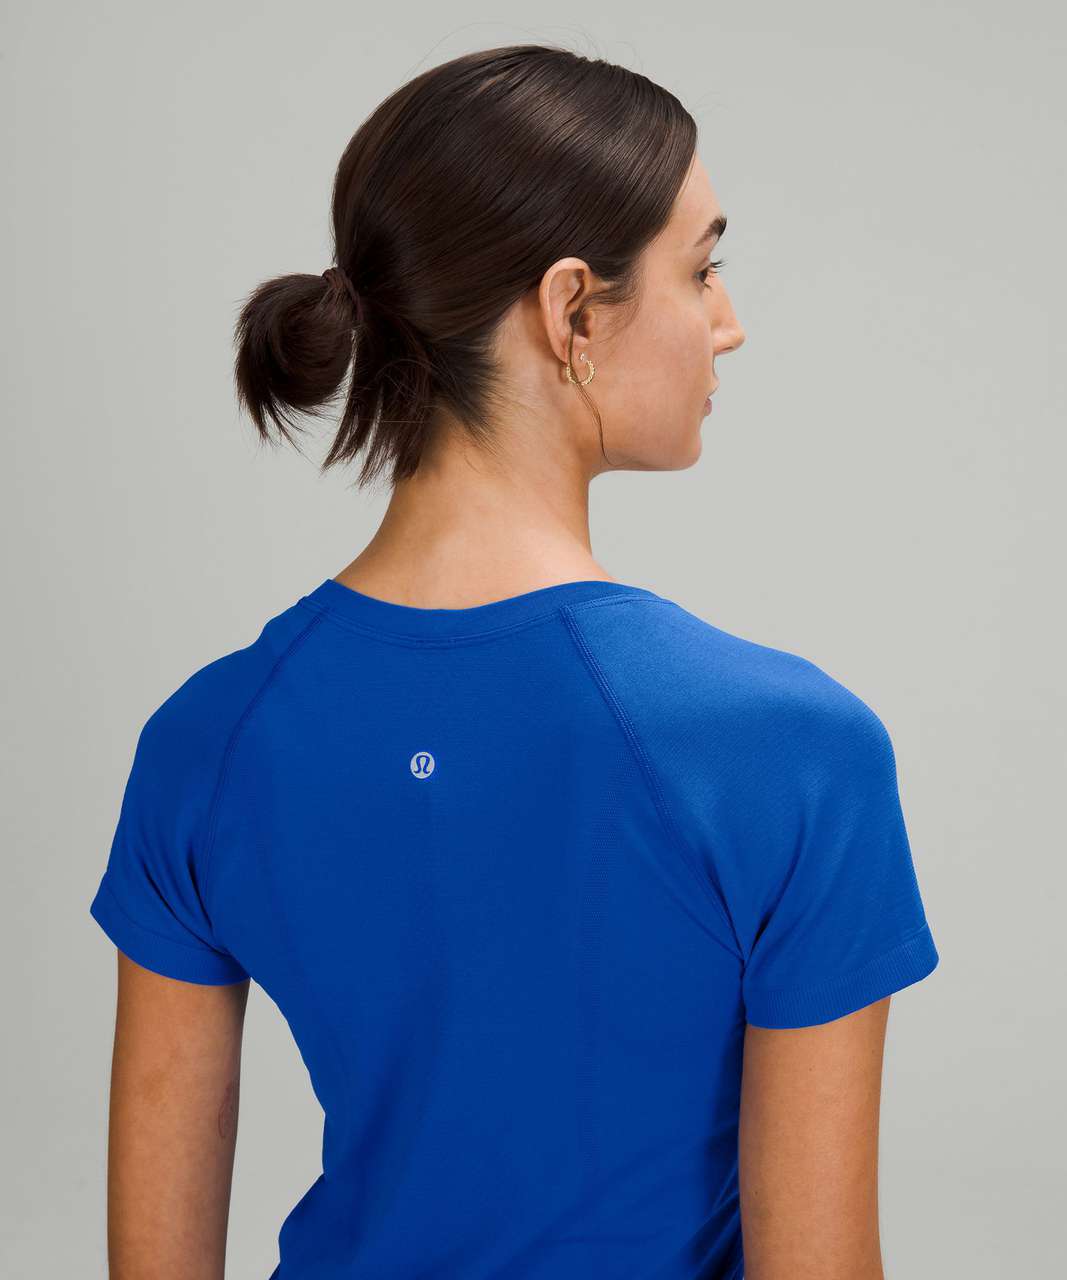 Lululemon Swiftly Tech Short Sleeve Shirt 2.0 - Blazer Blue Tone / Blazer Blue Tone